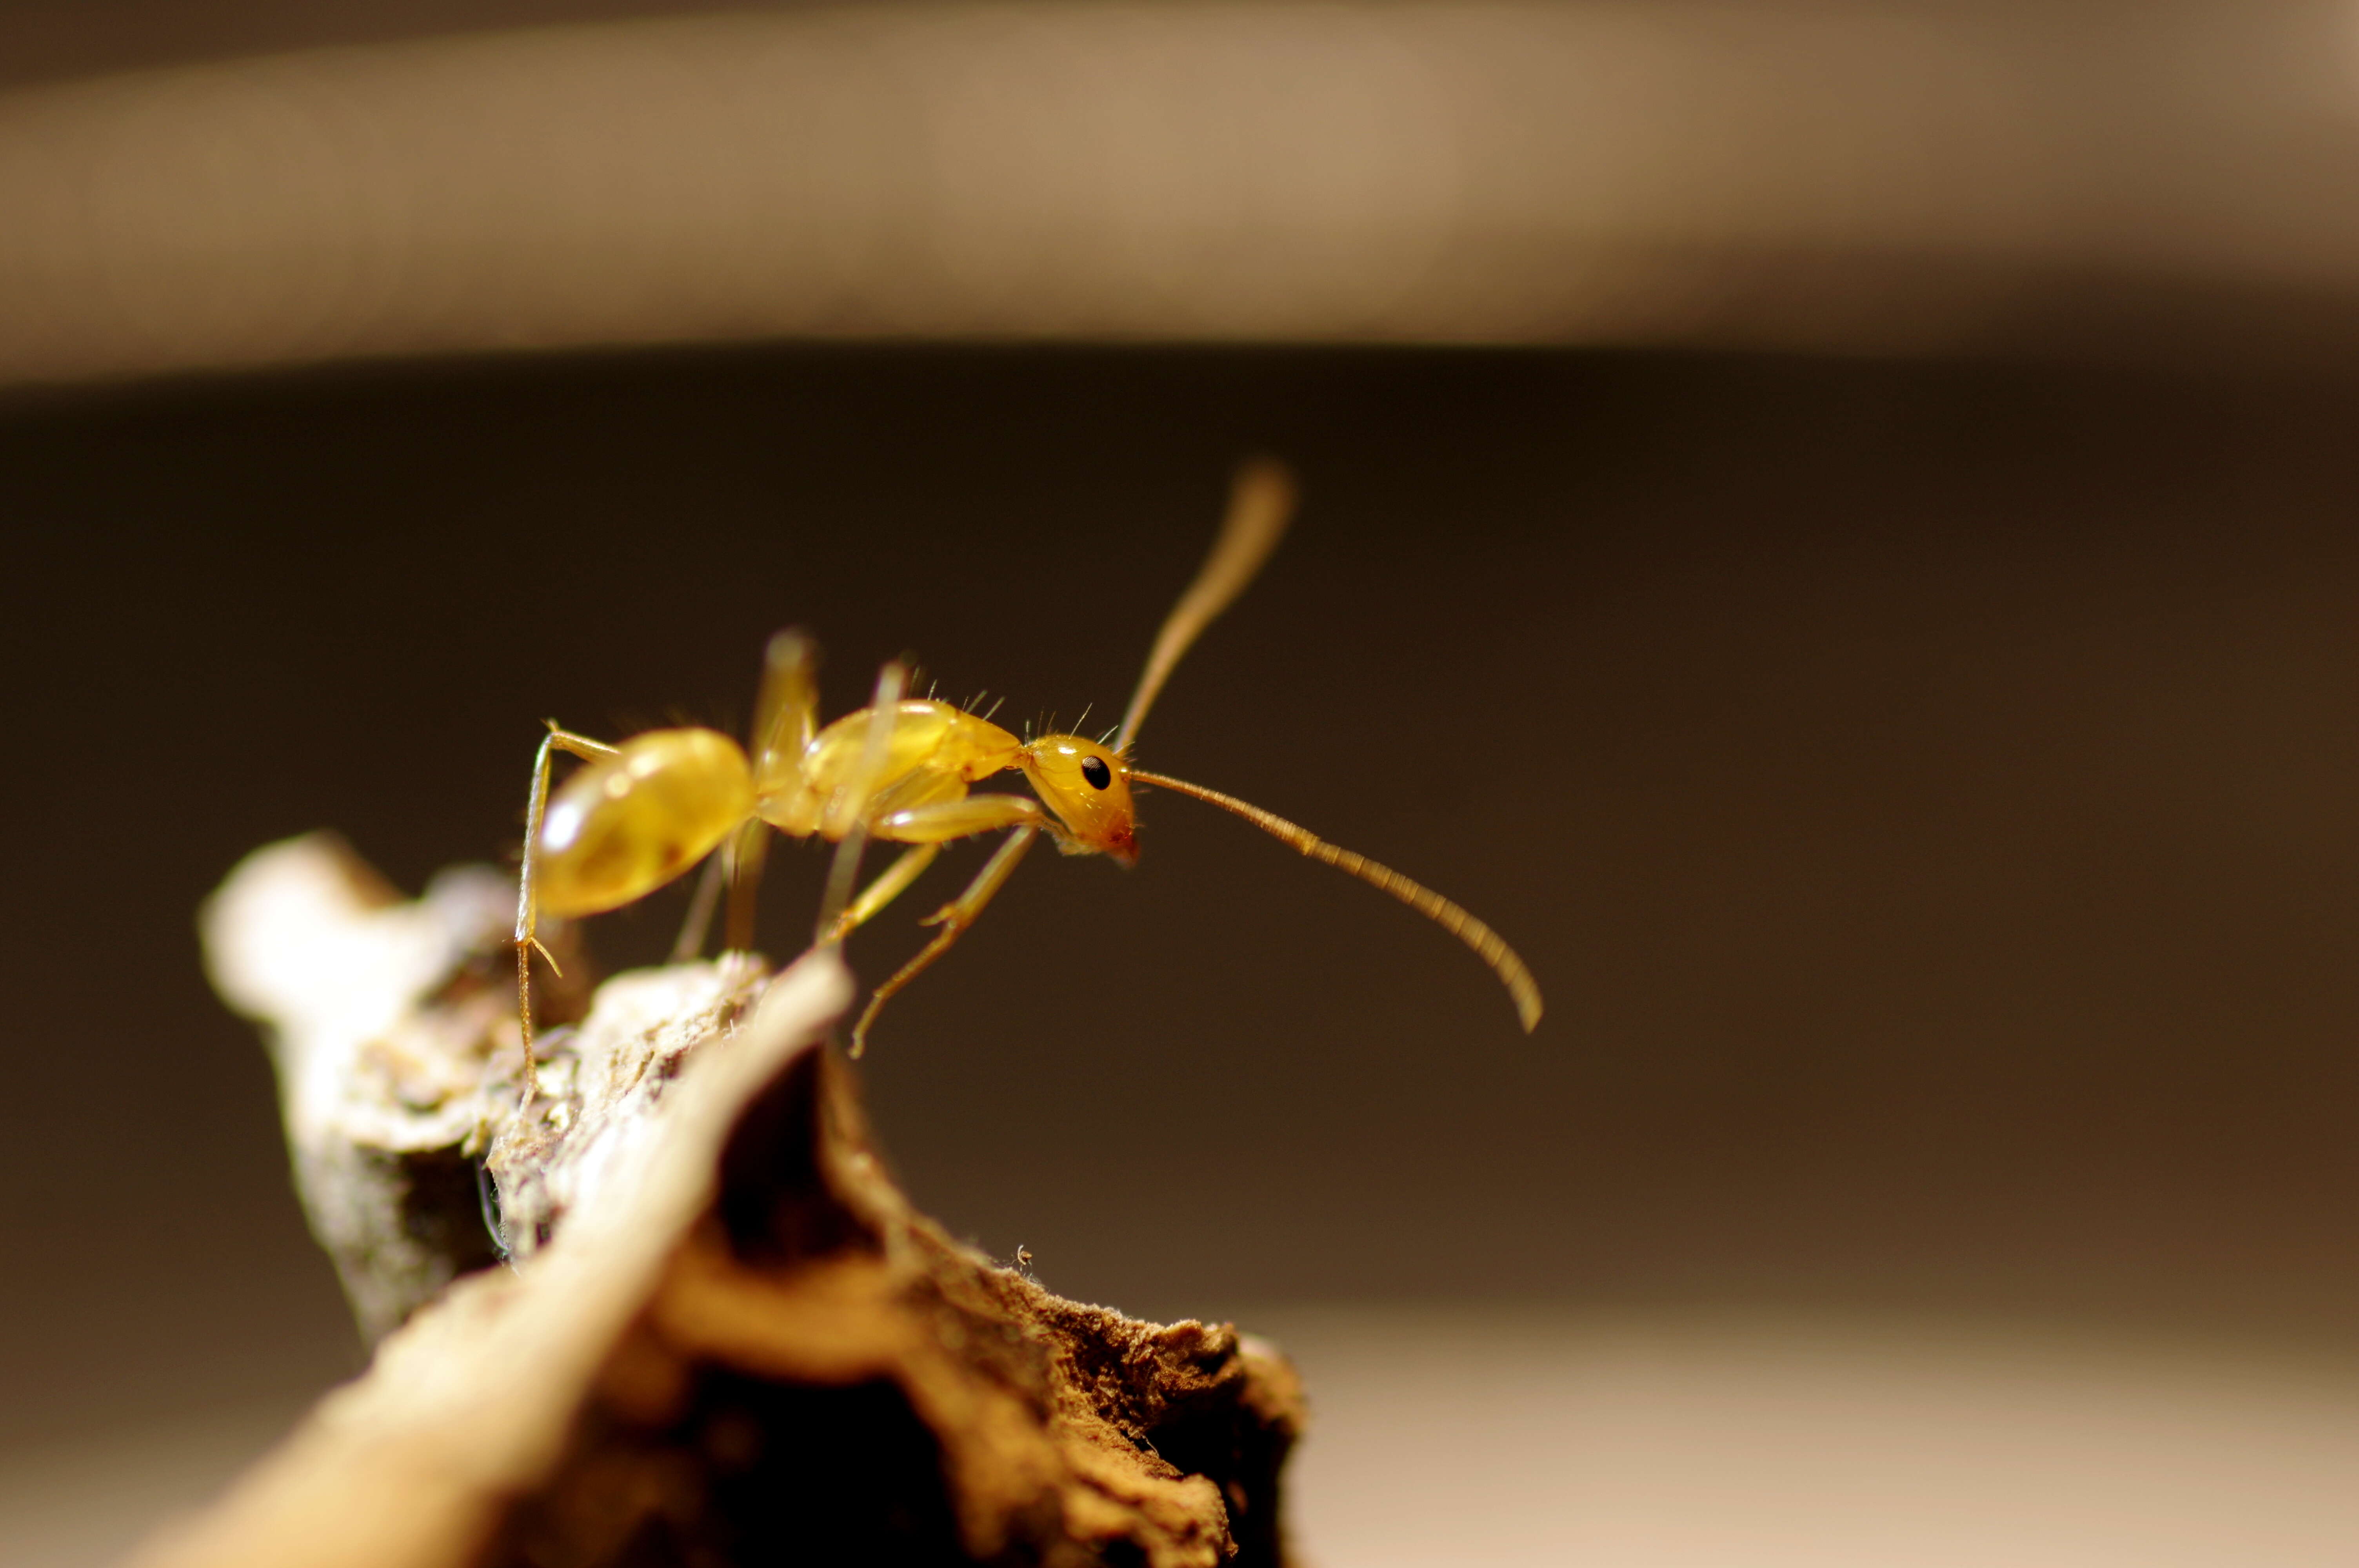 Image of Hawaiian carpenter ant